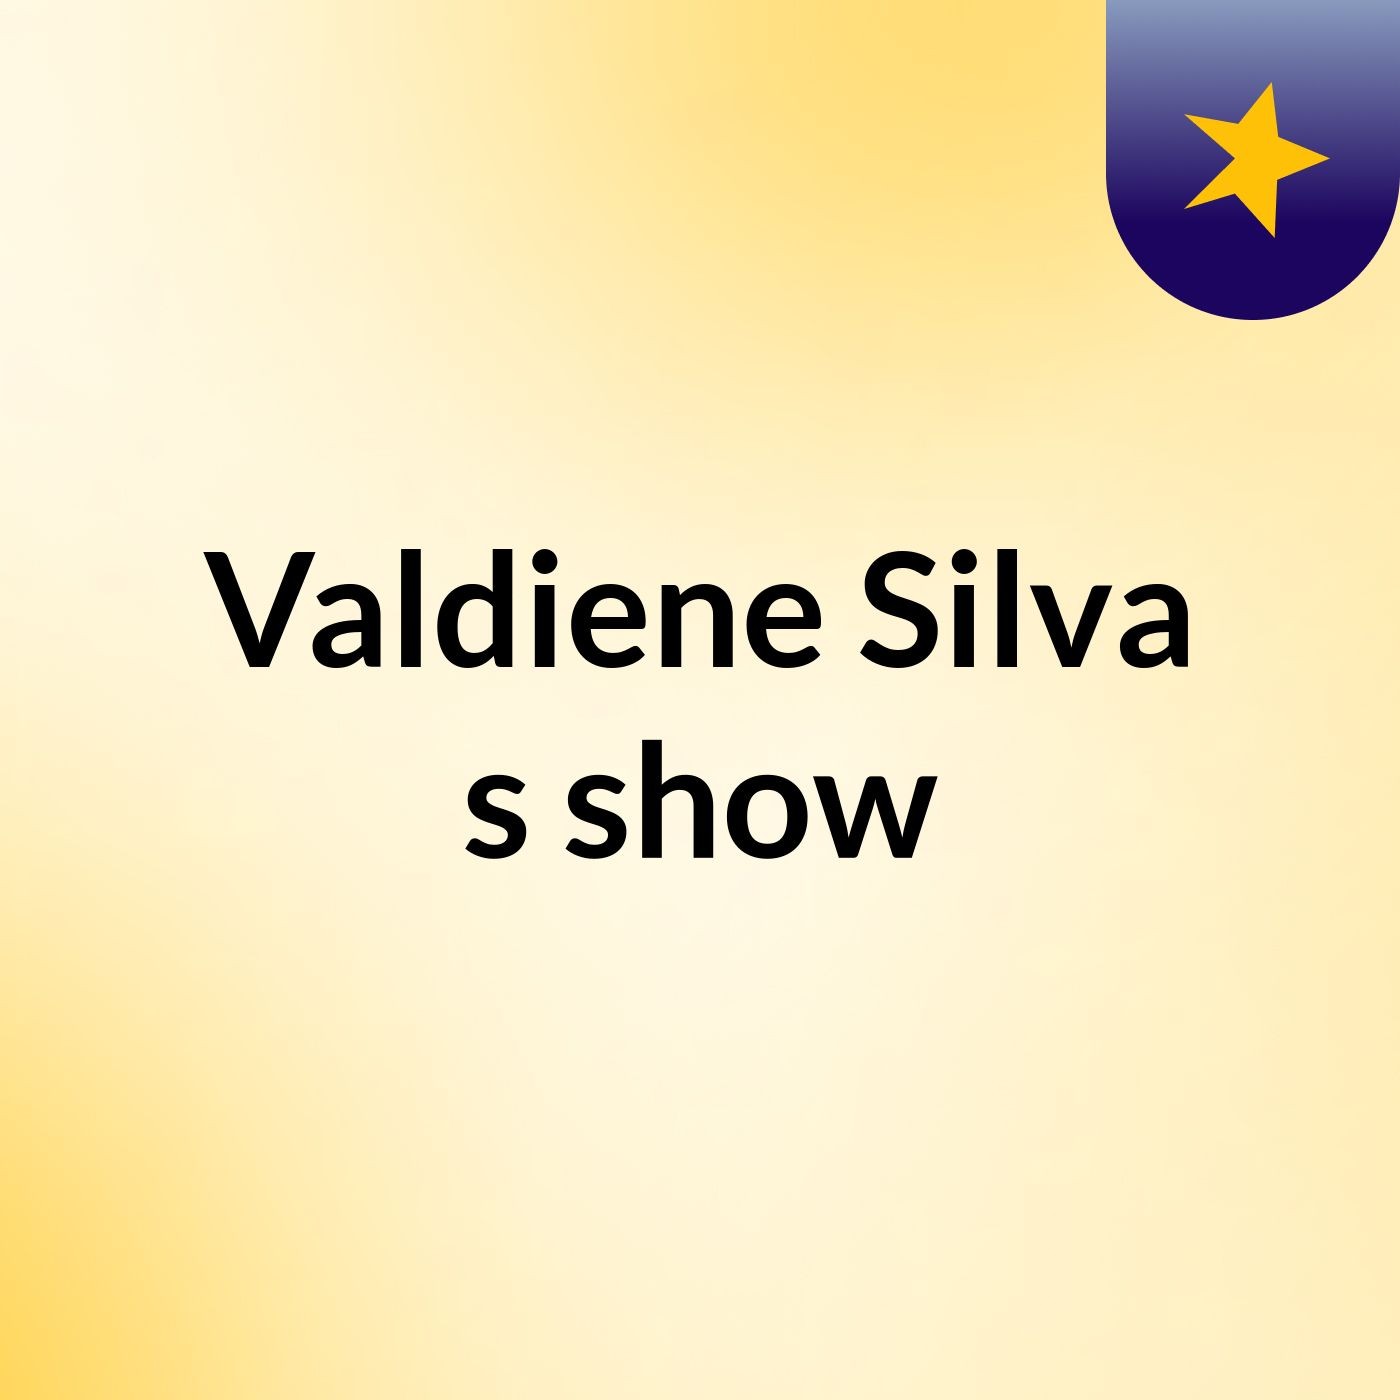 Valdiene Silva's show